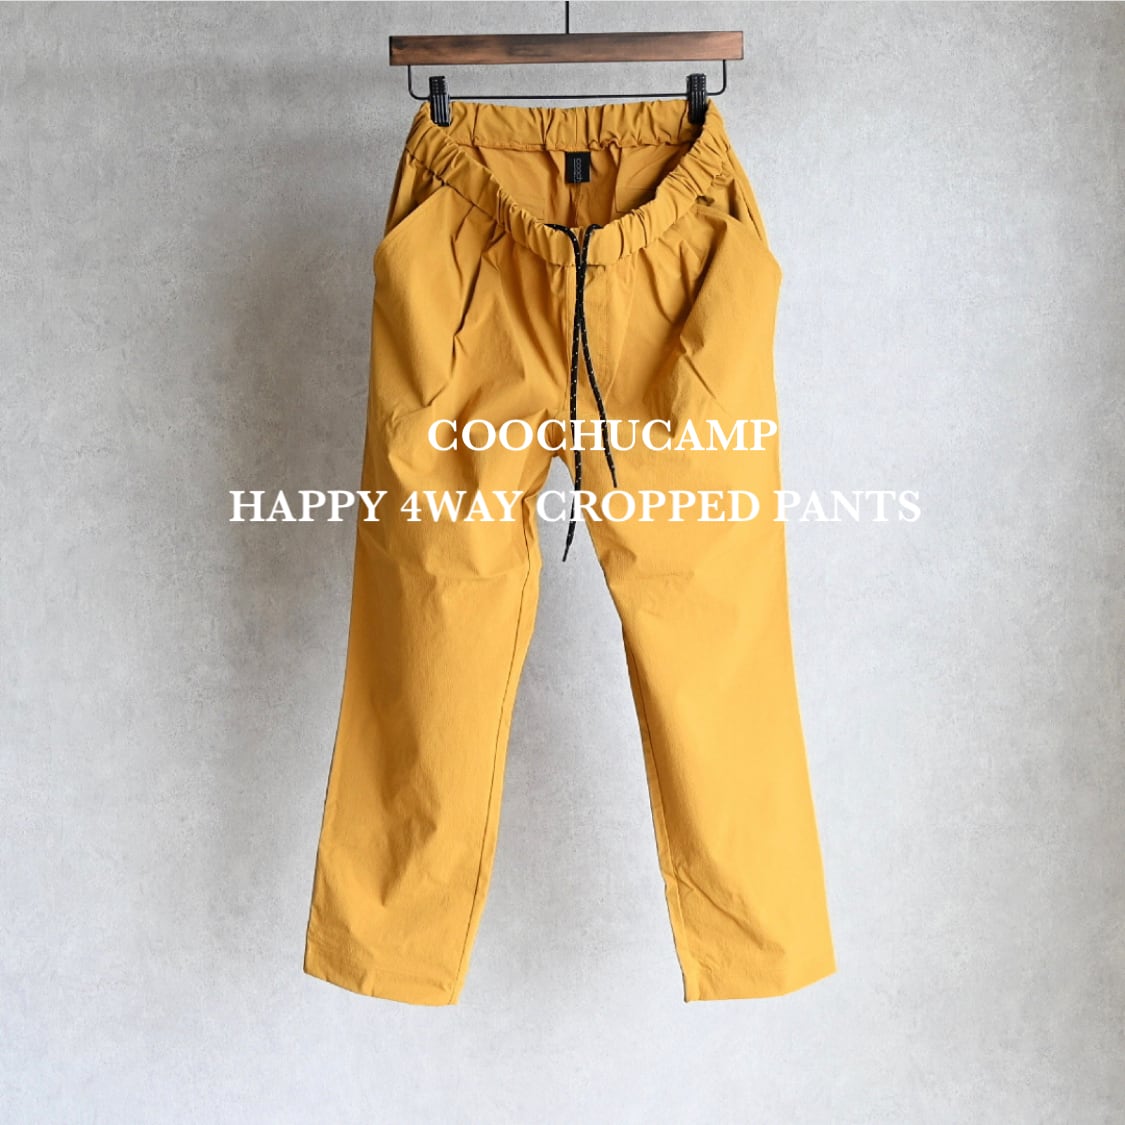 COOCHUCAMP】HAPPY 4WAY CROPPED PANTS クーチューキャンプ | comoda.com